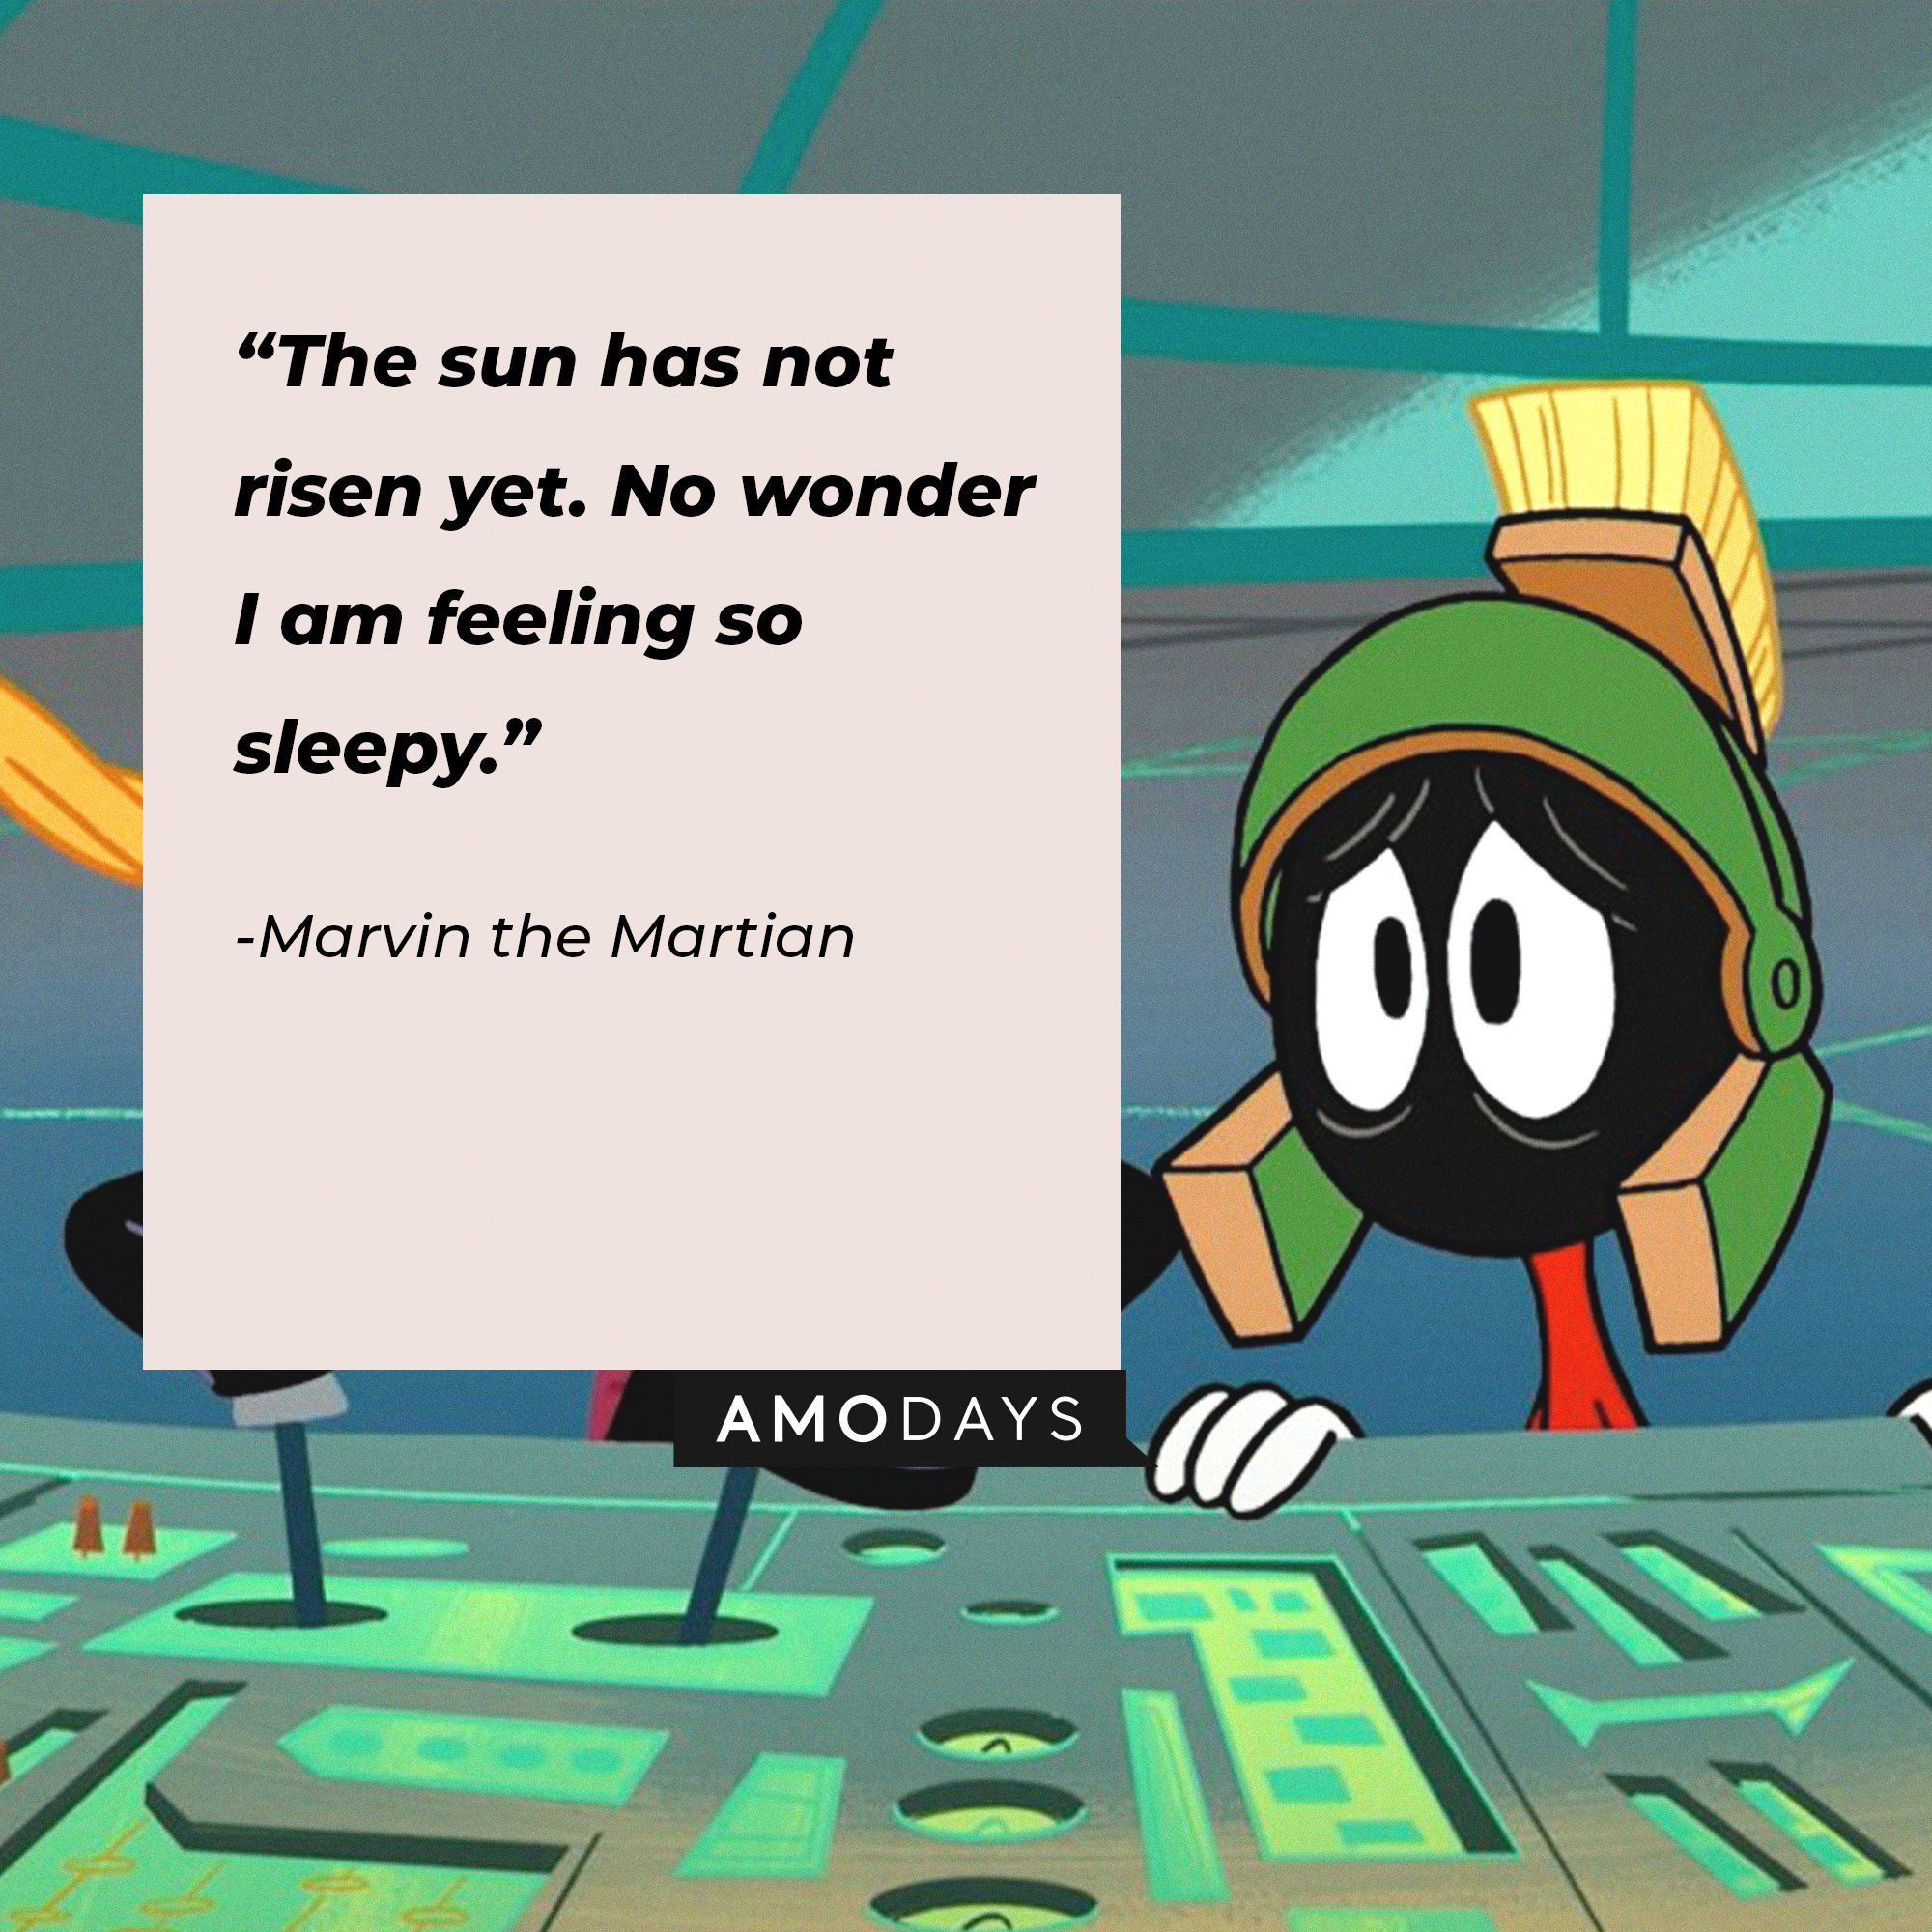 Marvin the Martian’s quote: "The sun has not risen yet. No wonder I am feeling so sleepy.” | Image: AmoDays